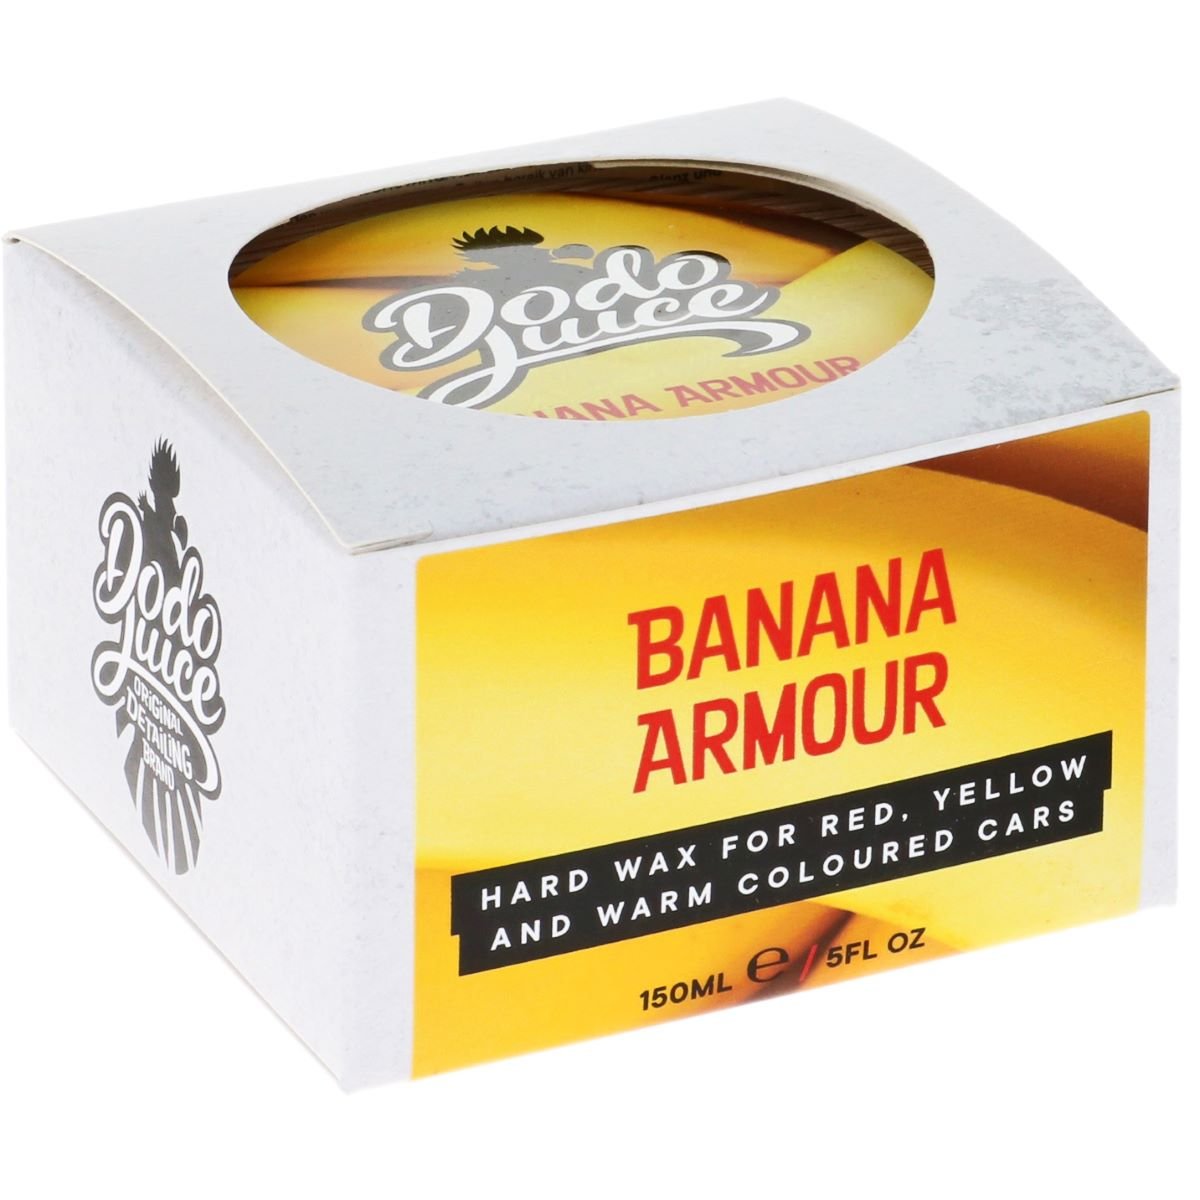 Banana Armour hard wax for warm coloured cars - 150ml